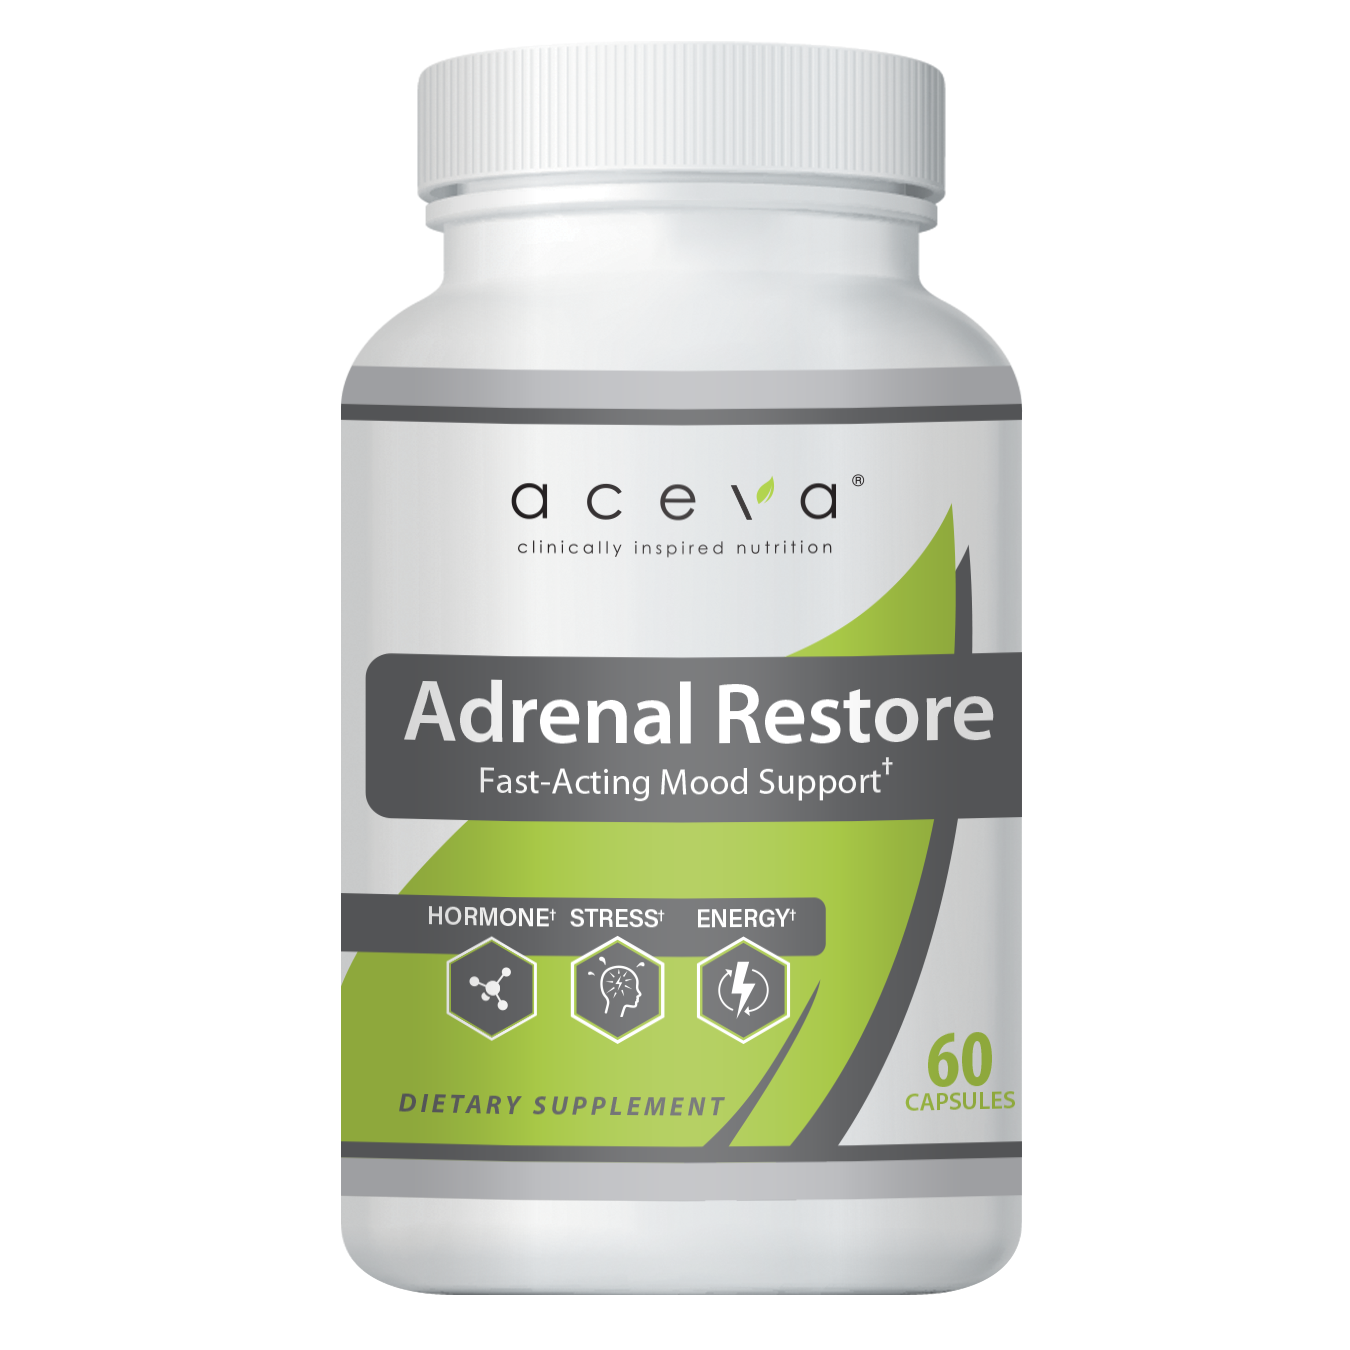 Adrenal Restore